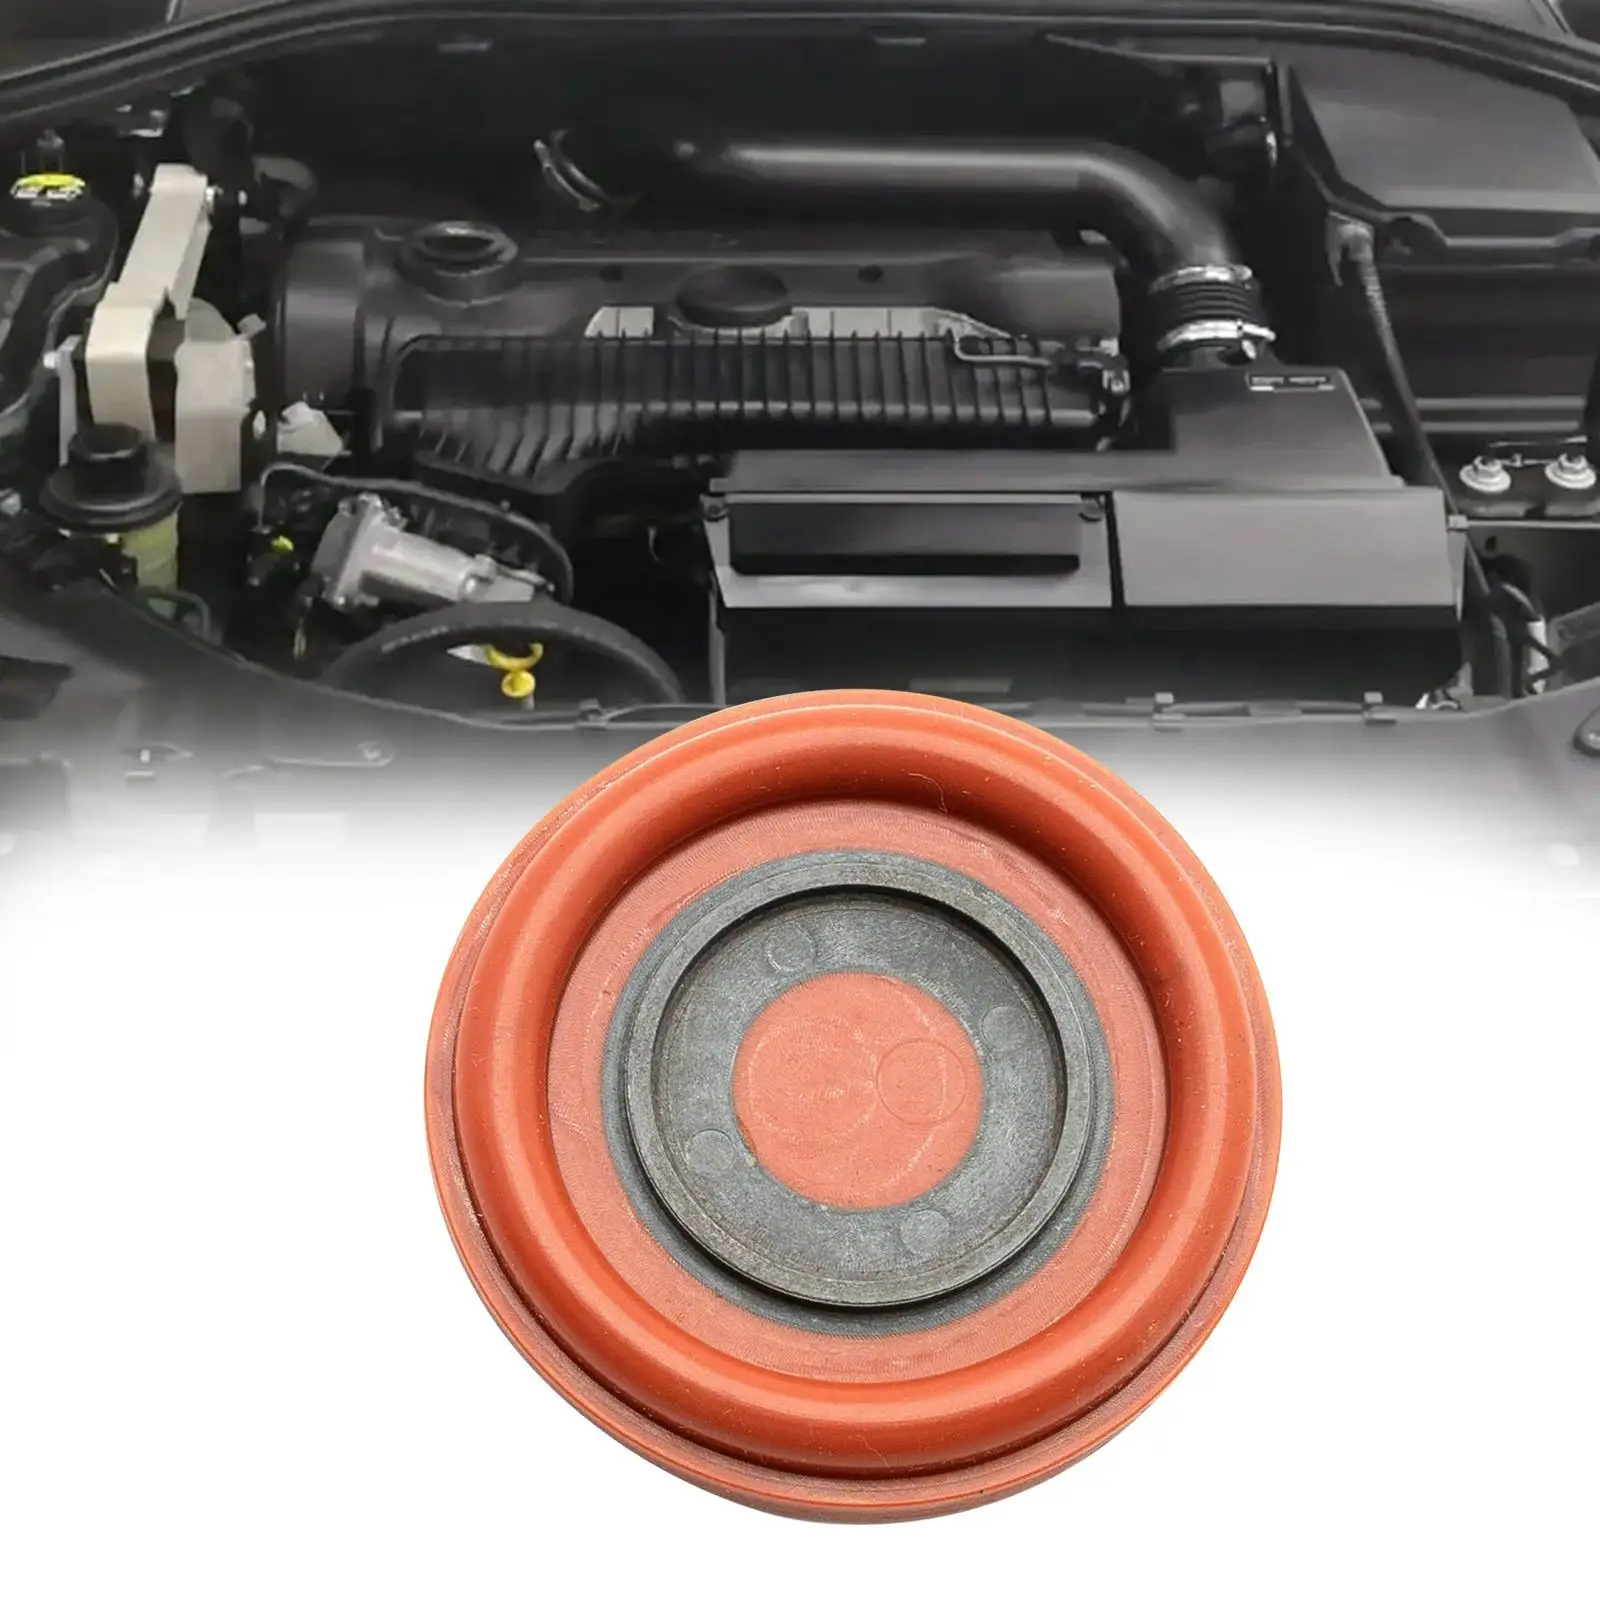 Vehicle Valve Oil Filter Diaphragm 1781598 31338685 30788494 31338684 for Ford Focus Mondeo Kuga C-Max Accessories